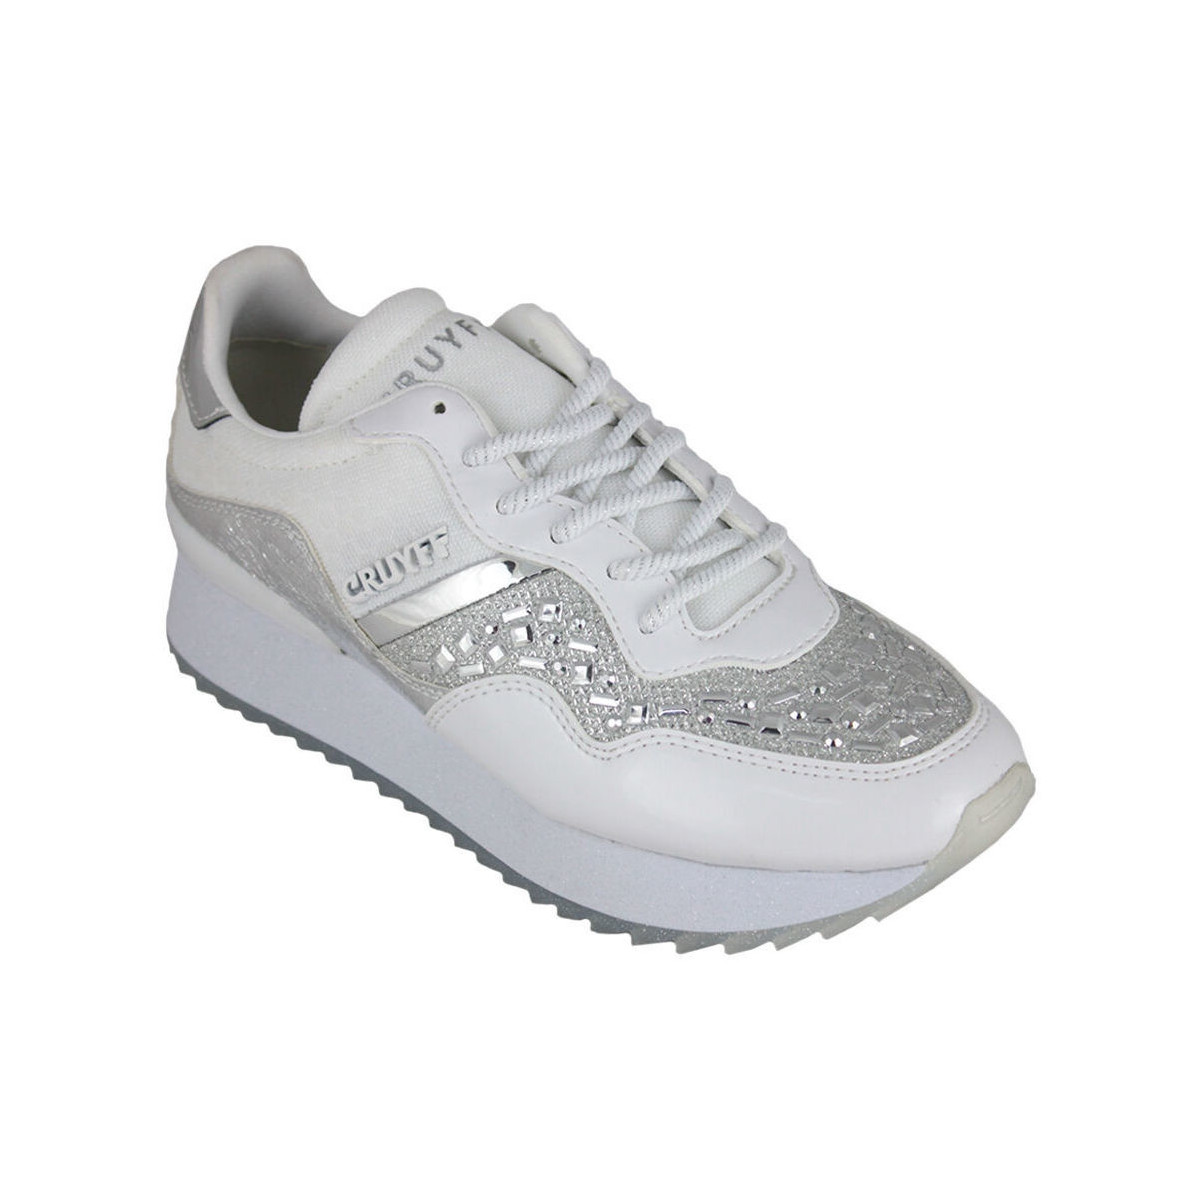 Skor Dam Sneakers Cruyff Wave embelleshed CC7931201 410 White Vit